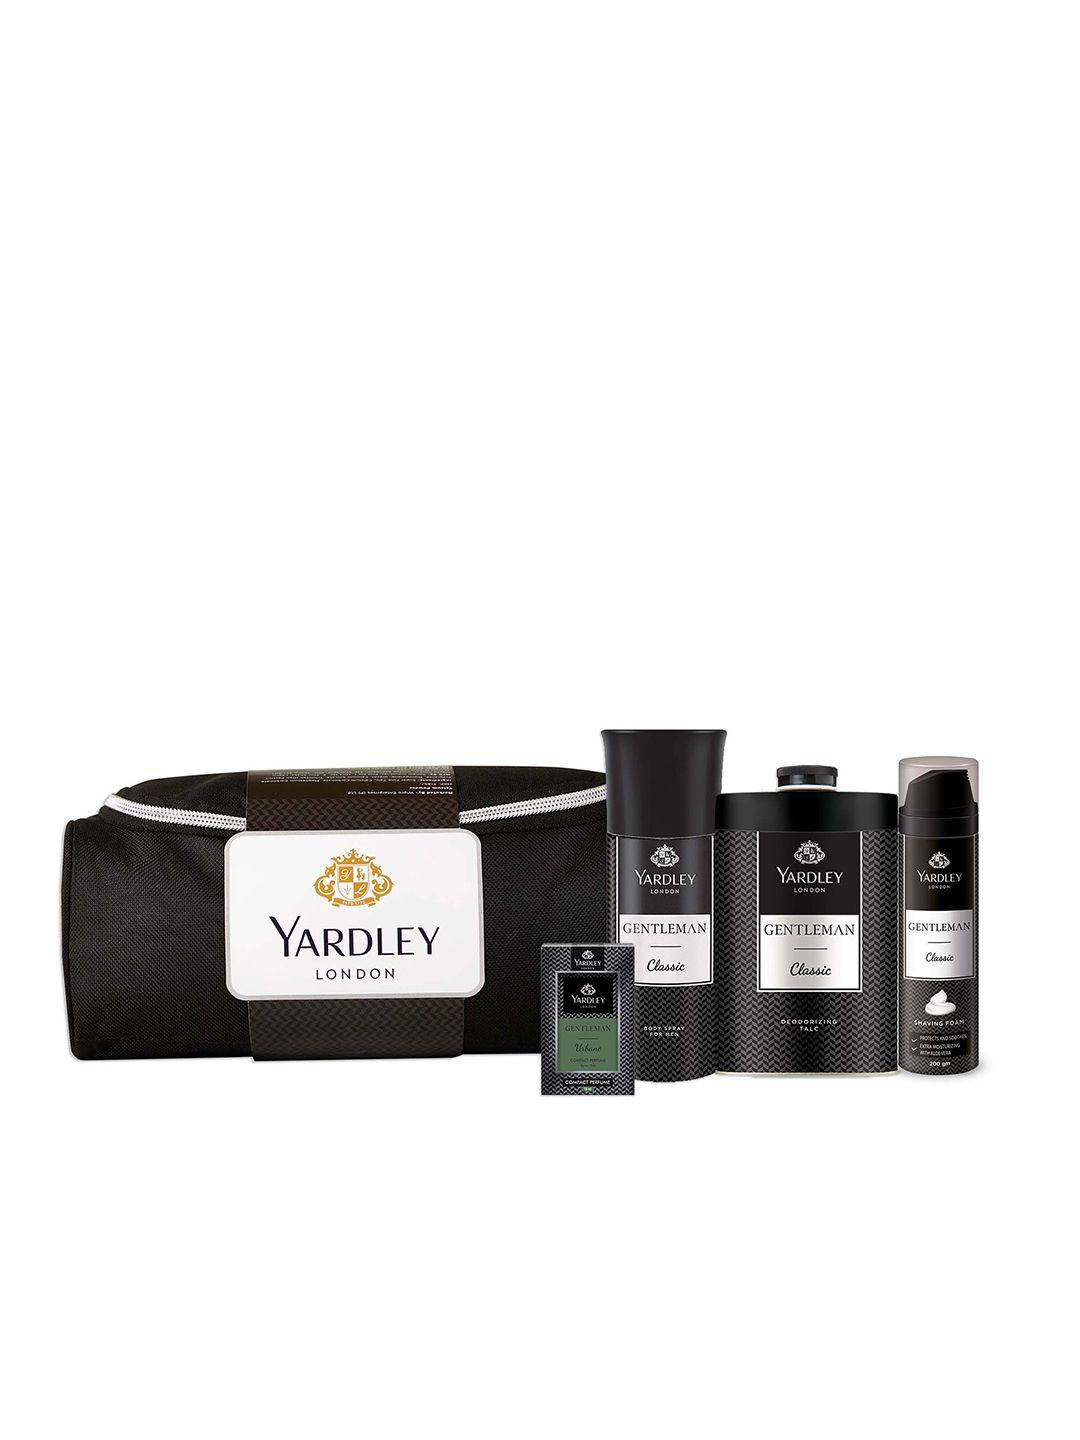 yardley london gentleman range fragrance gift set - 518ml